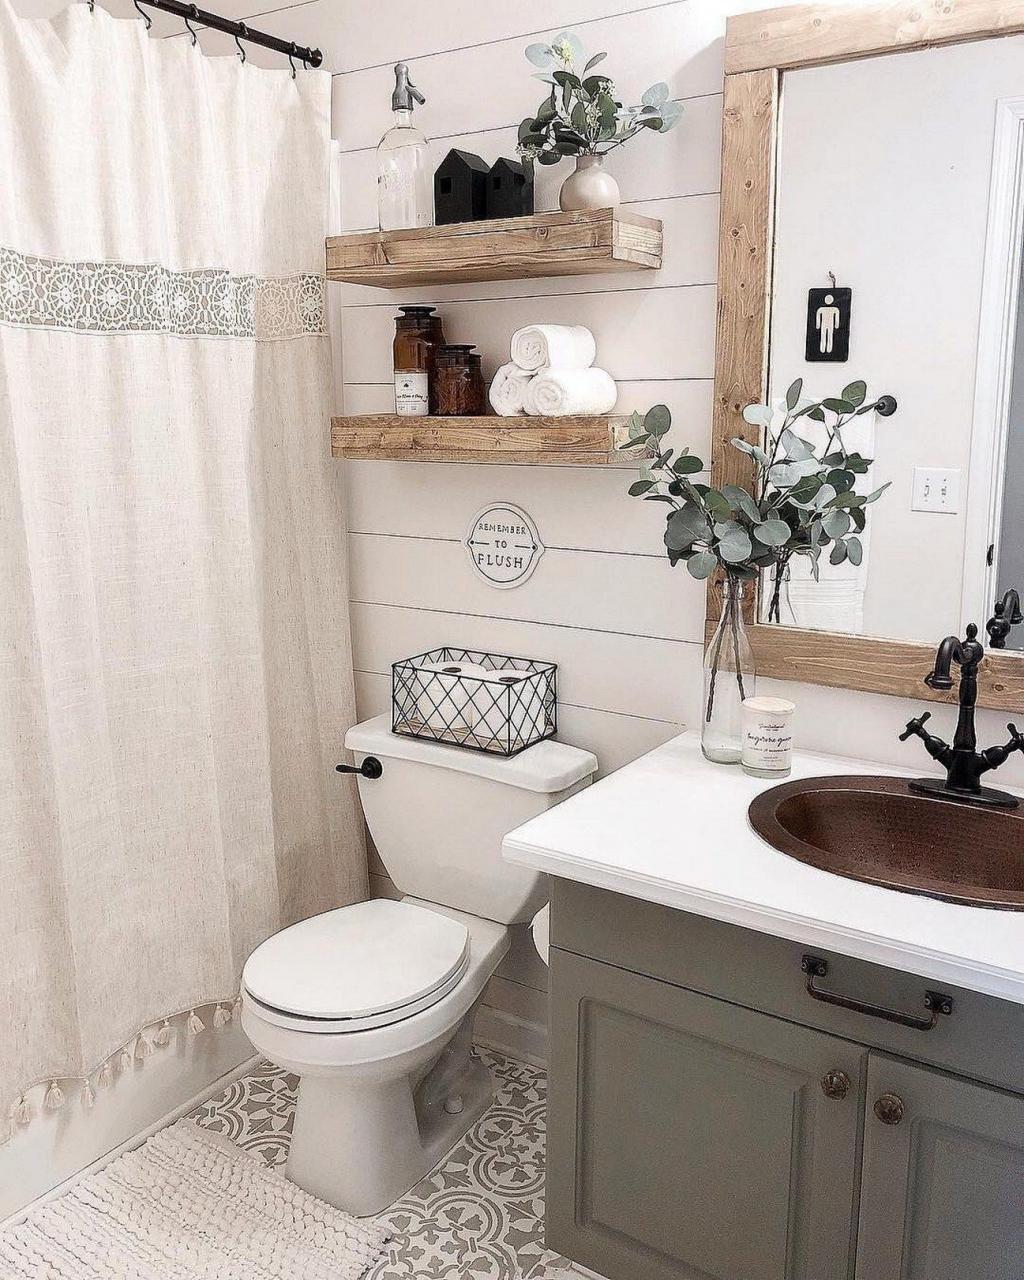 40+ Beautiful Bathroom Shelves Decorating Ideas 11 » Getideas in 2020